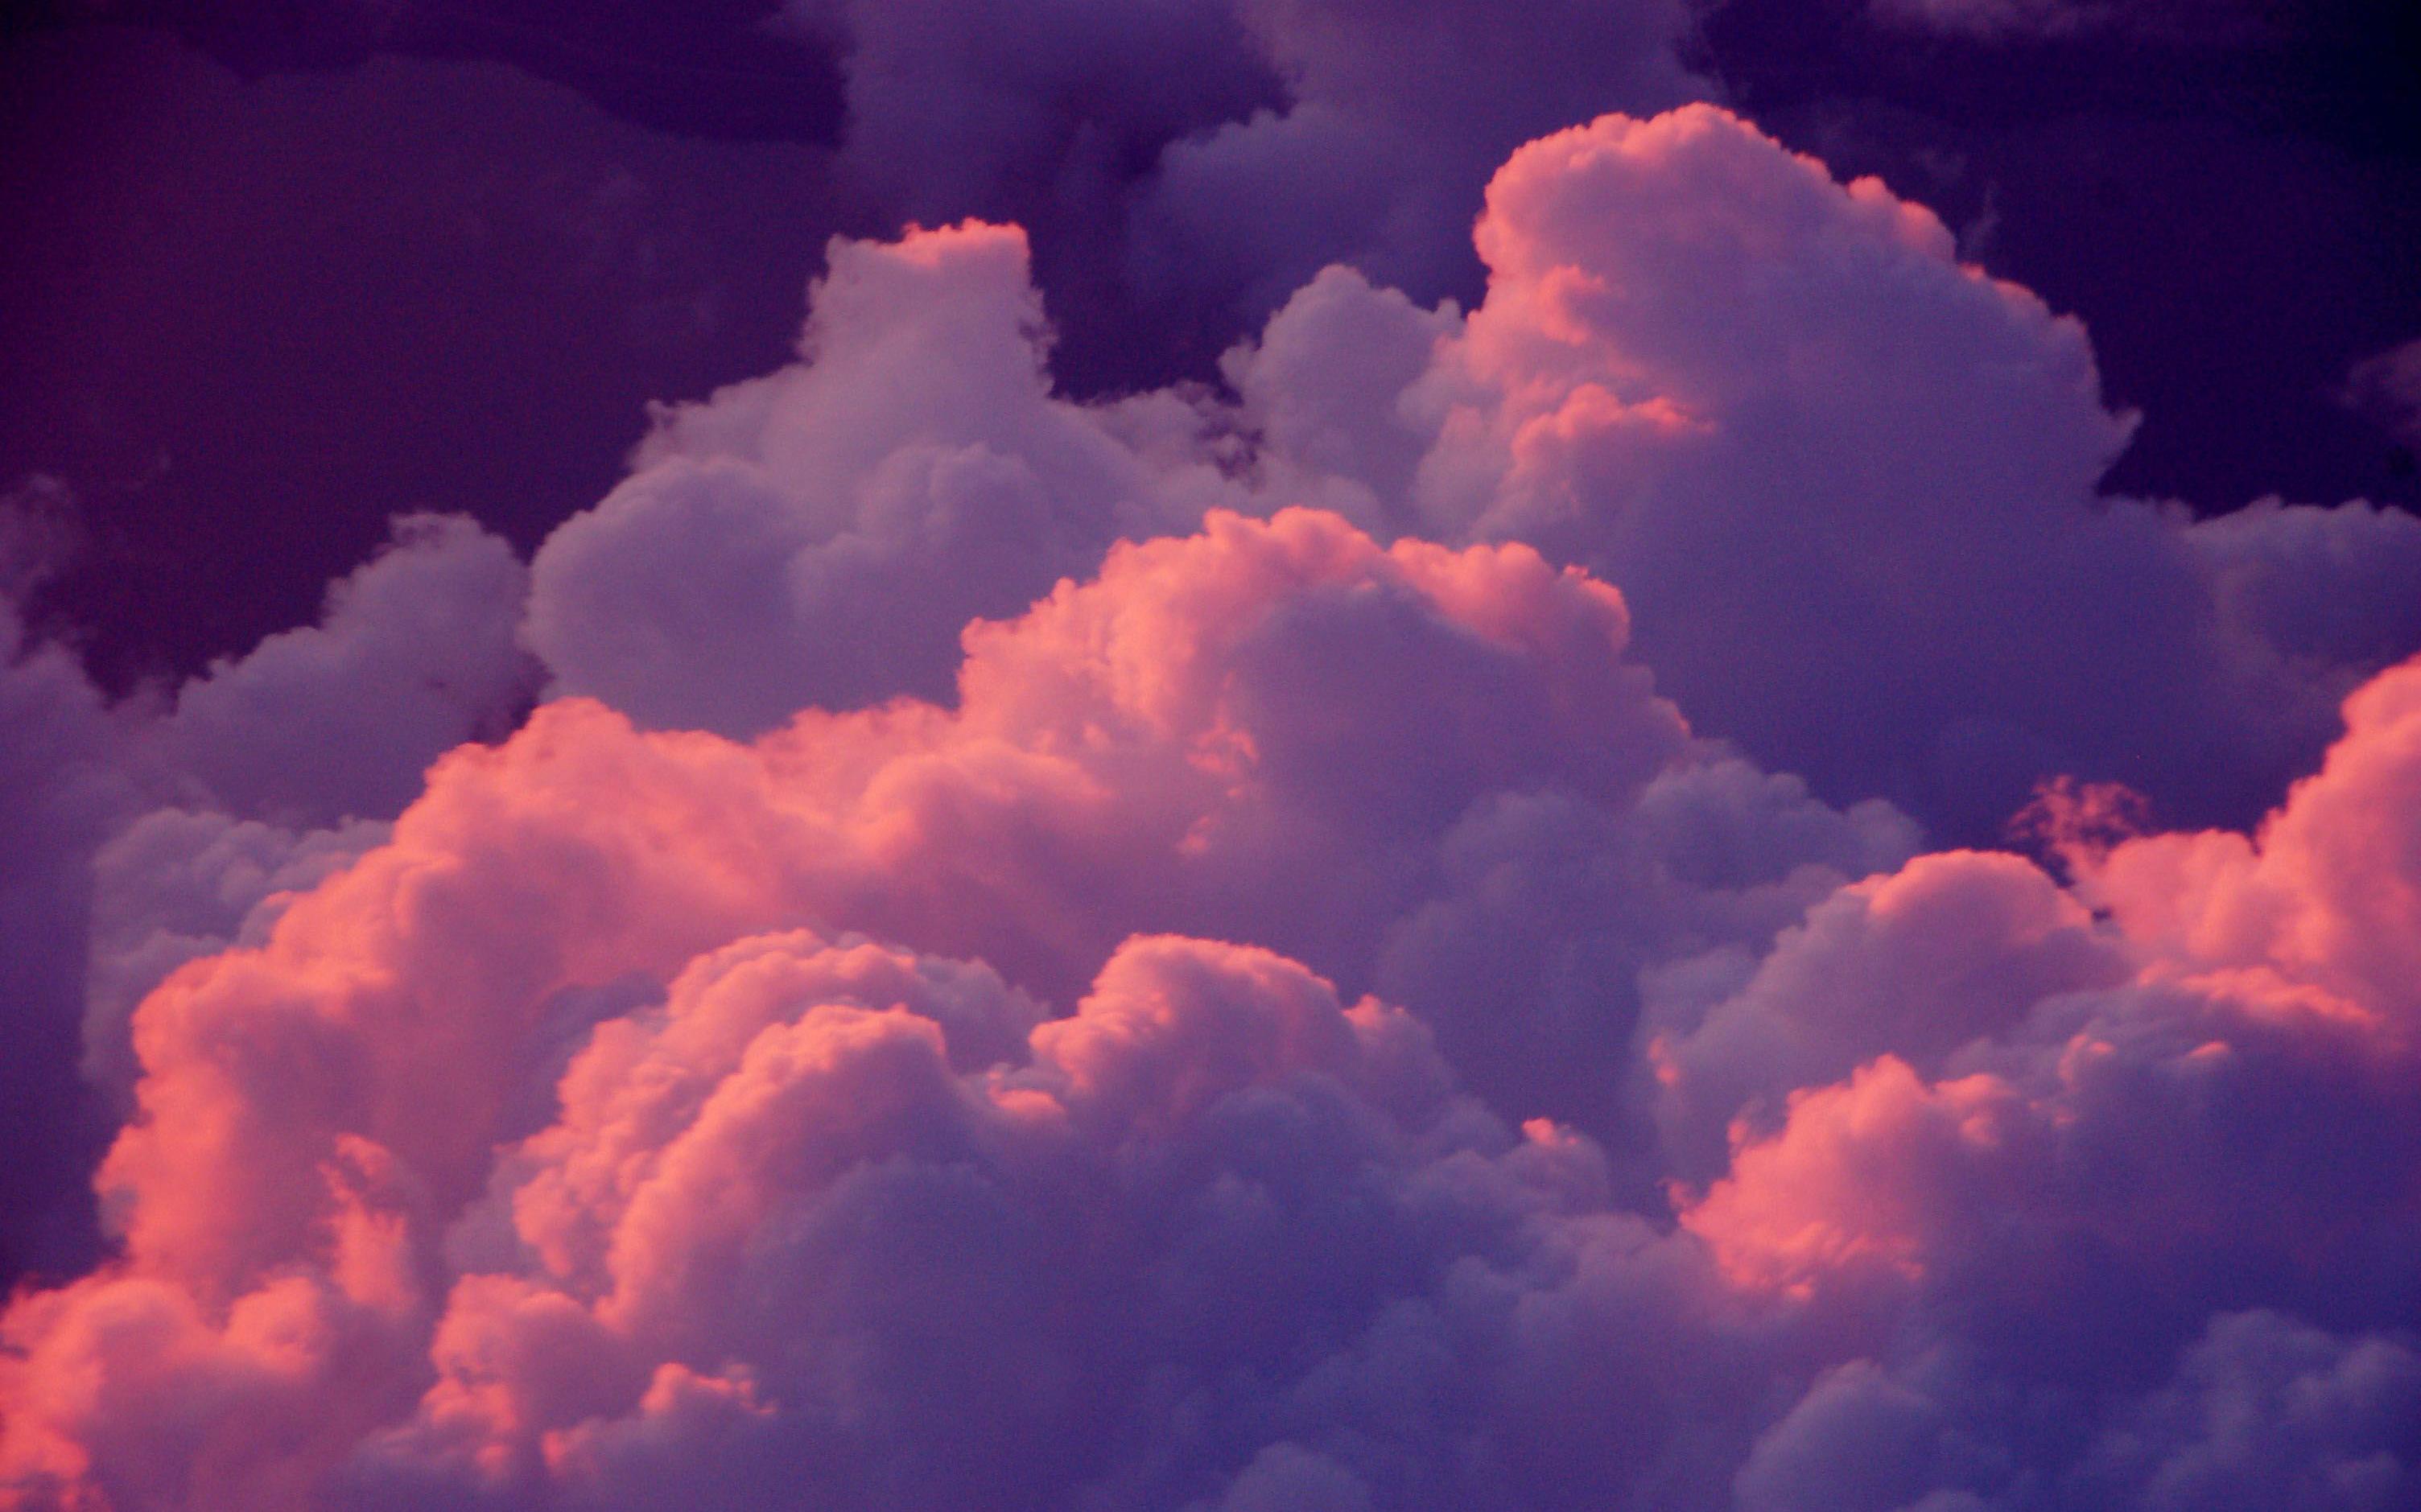 Aesthetic Cloud Wallpaper For Desktop